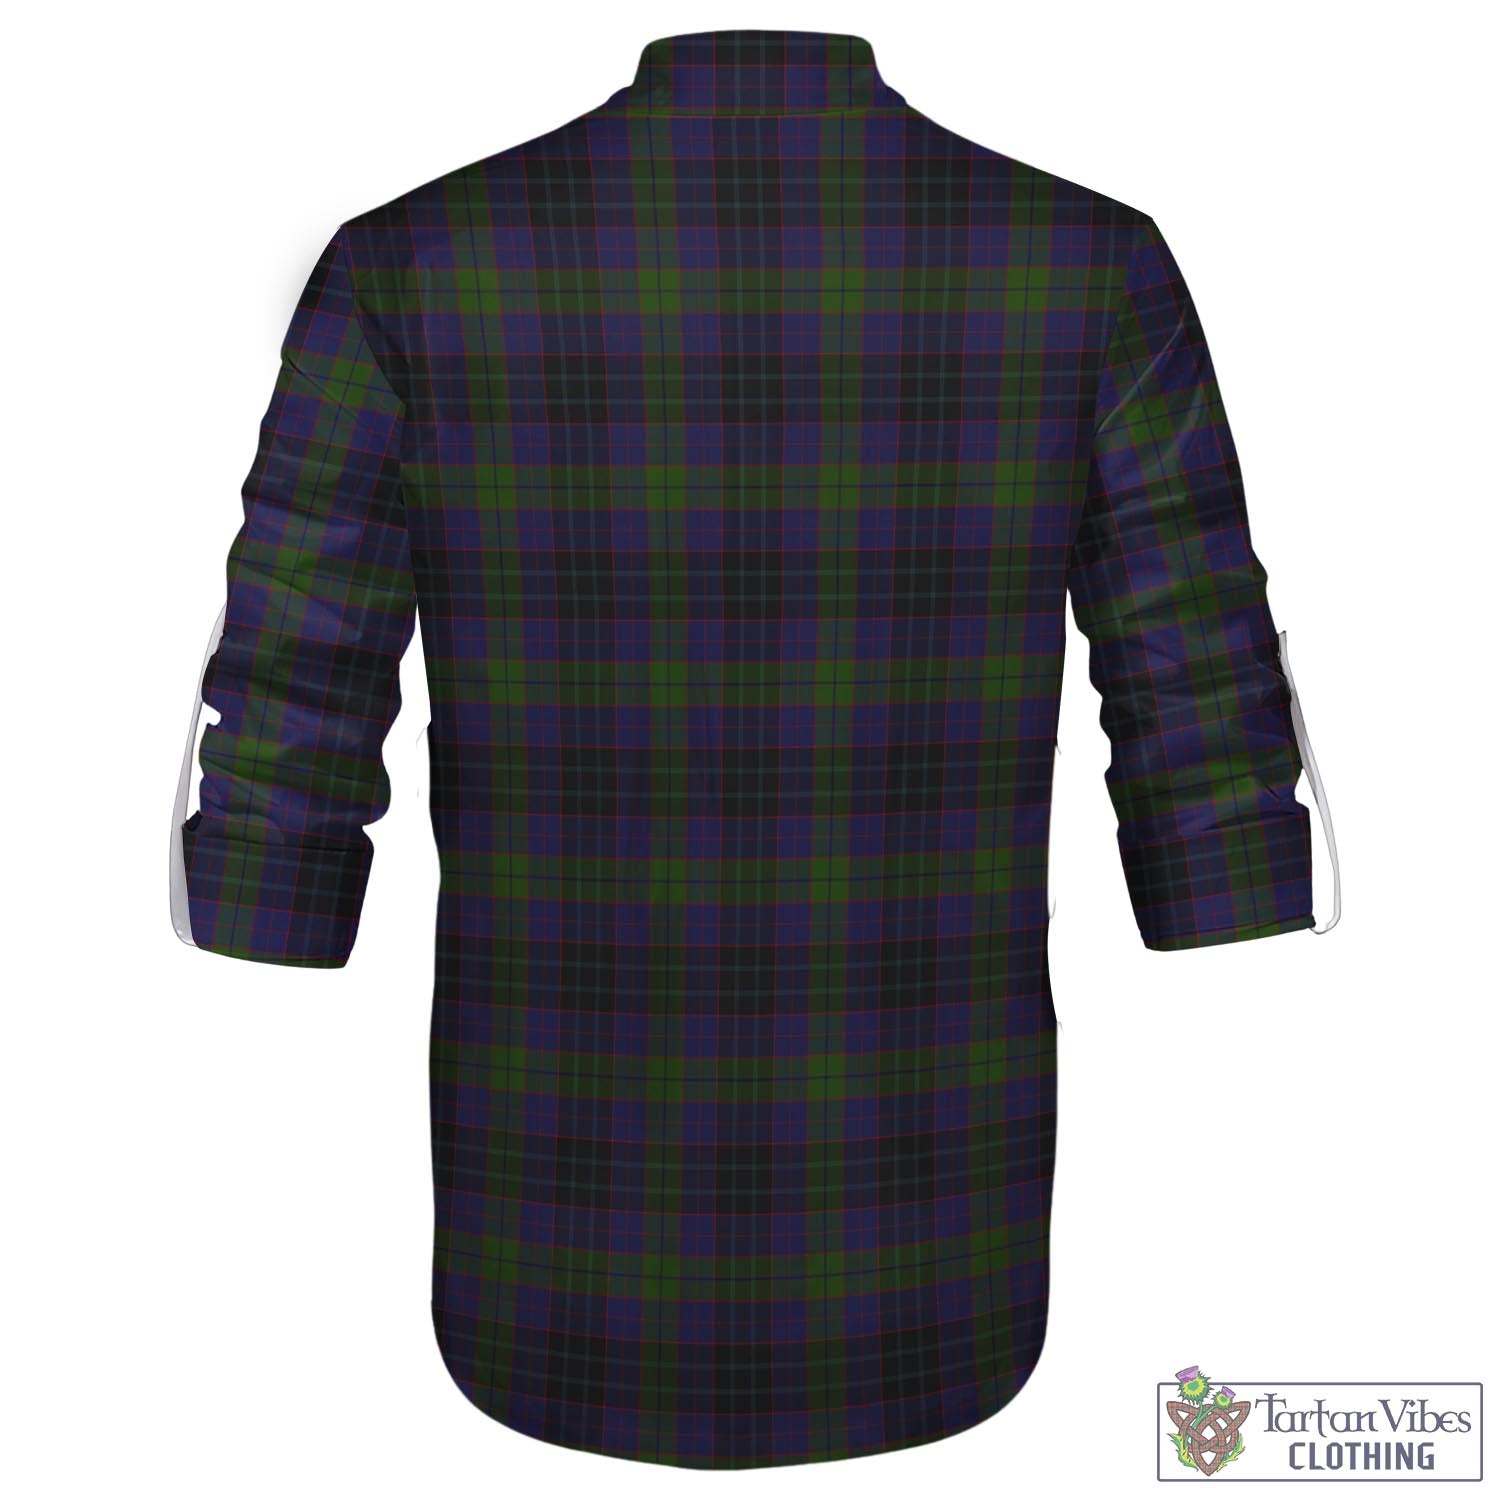 Tartan Vibes Clothing Lumsden Hunting Tartan Men's Scottish Traditional Jacobite Ghillie Kilt Shirt with Family Crest